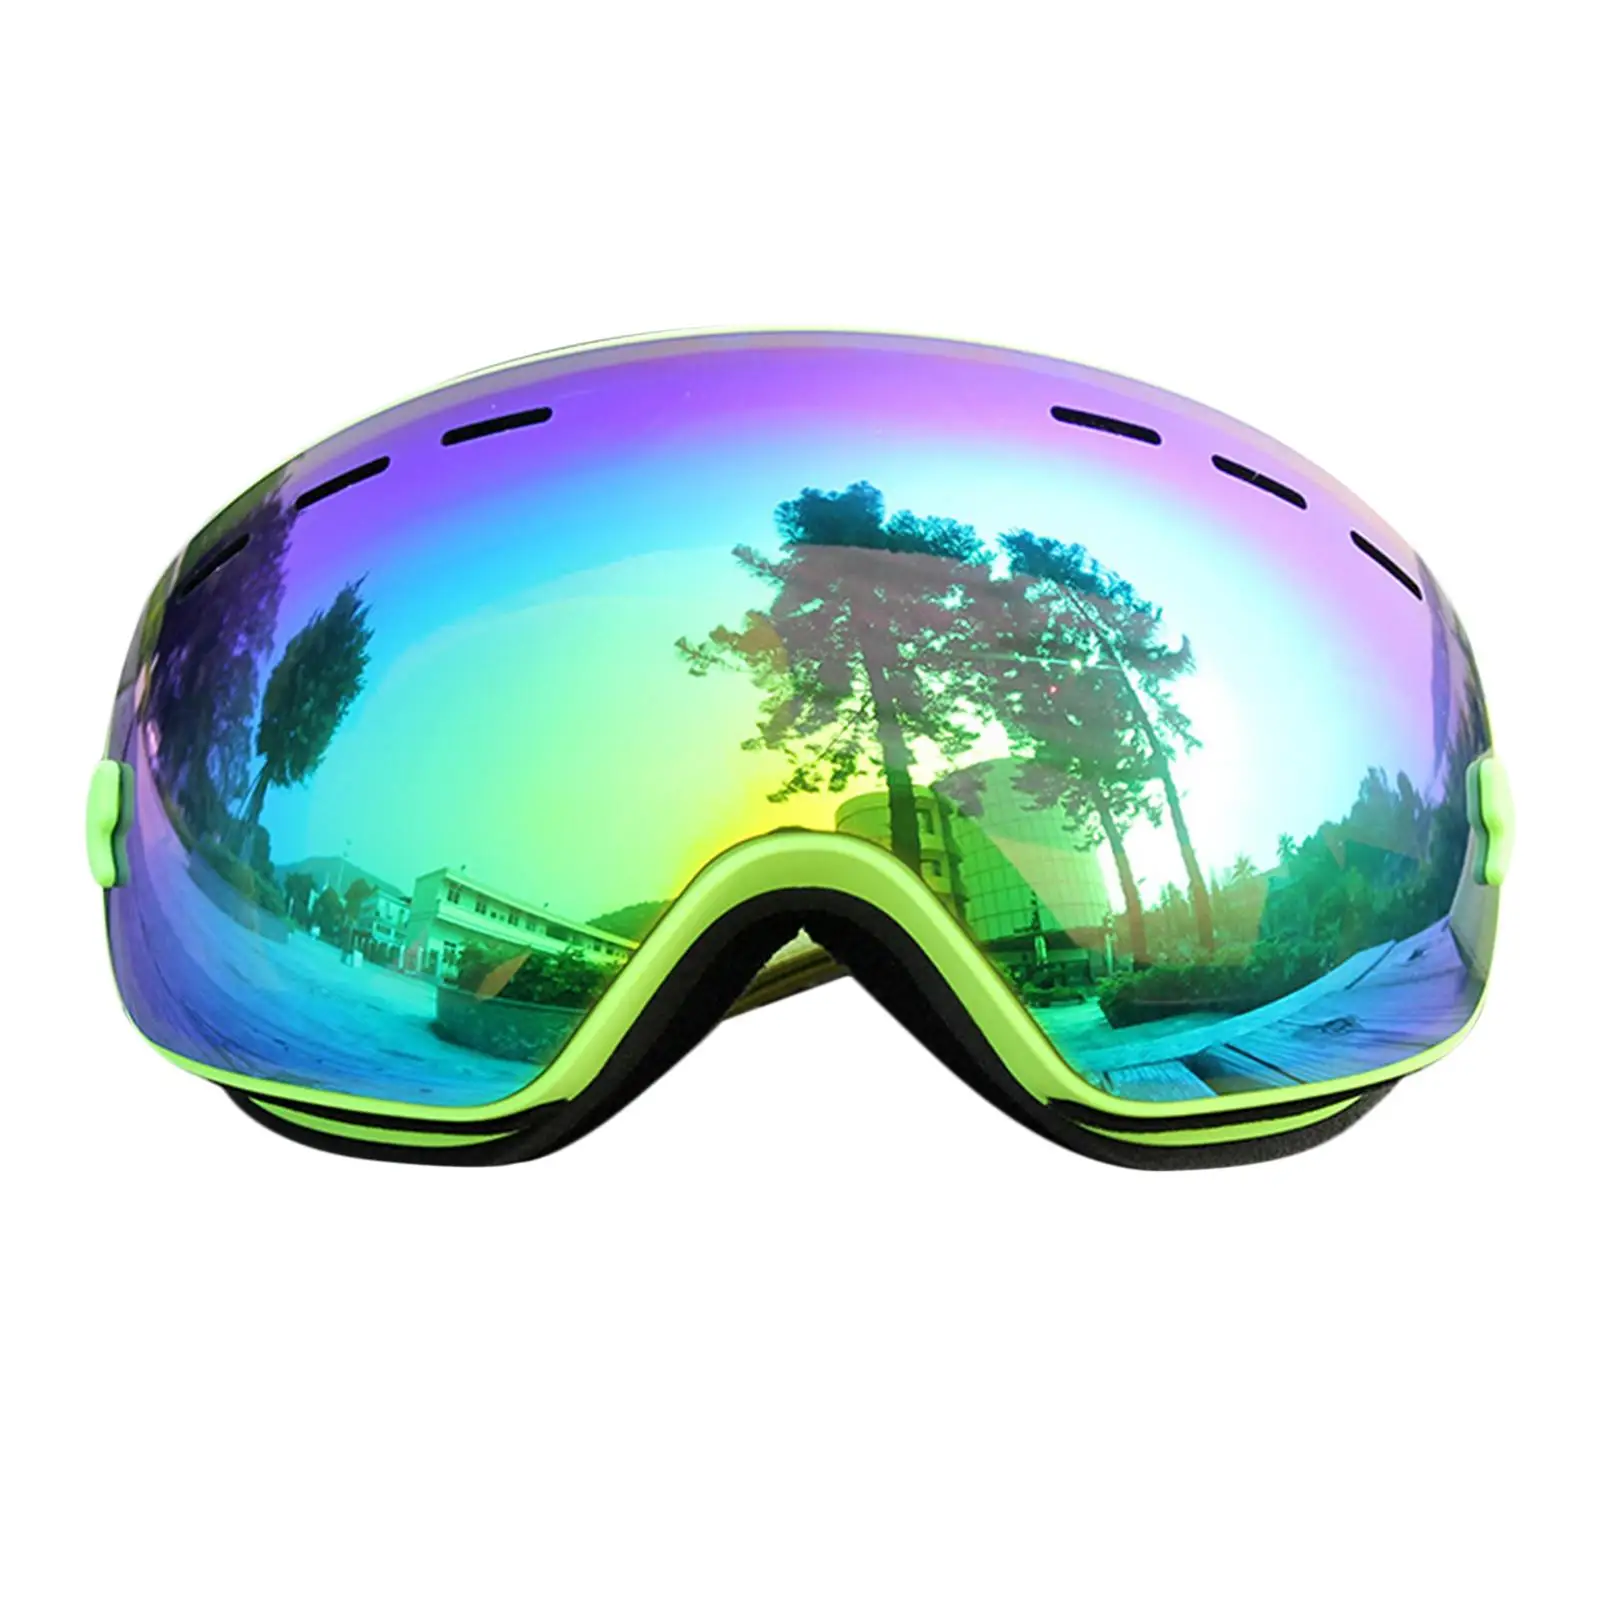 Professional Ski Snowboard Goggles Anti-fog Snowmobile Sunglasses Dual Lens for Winter Sports